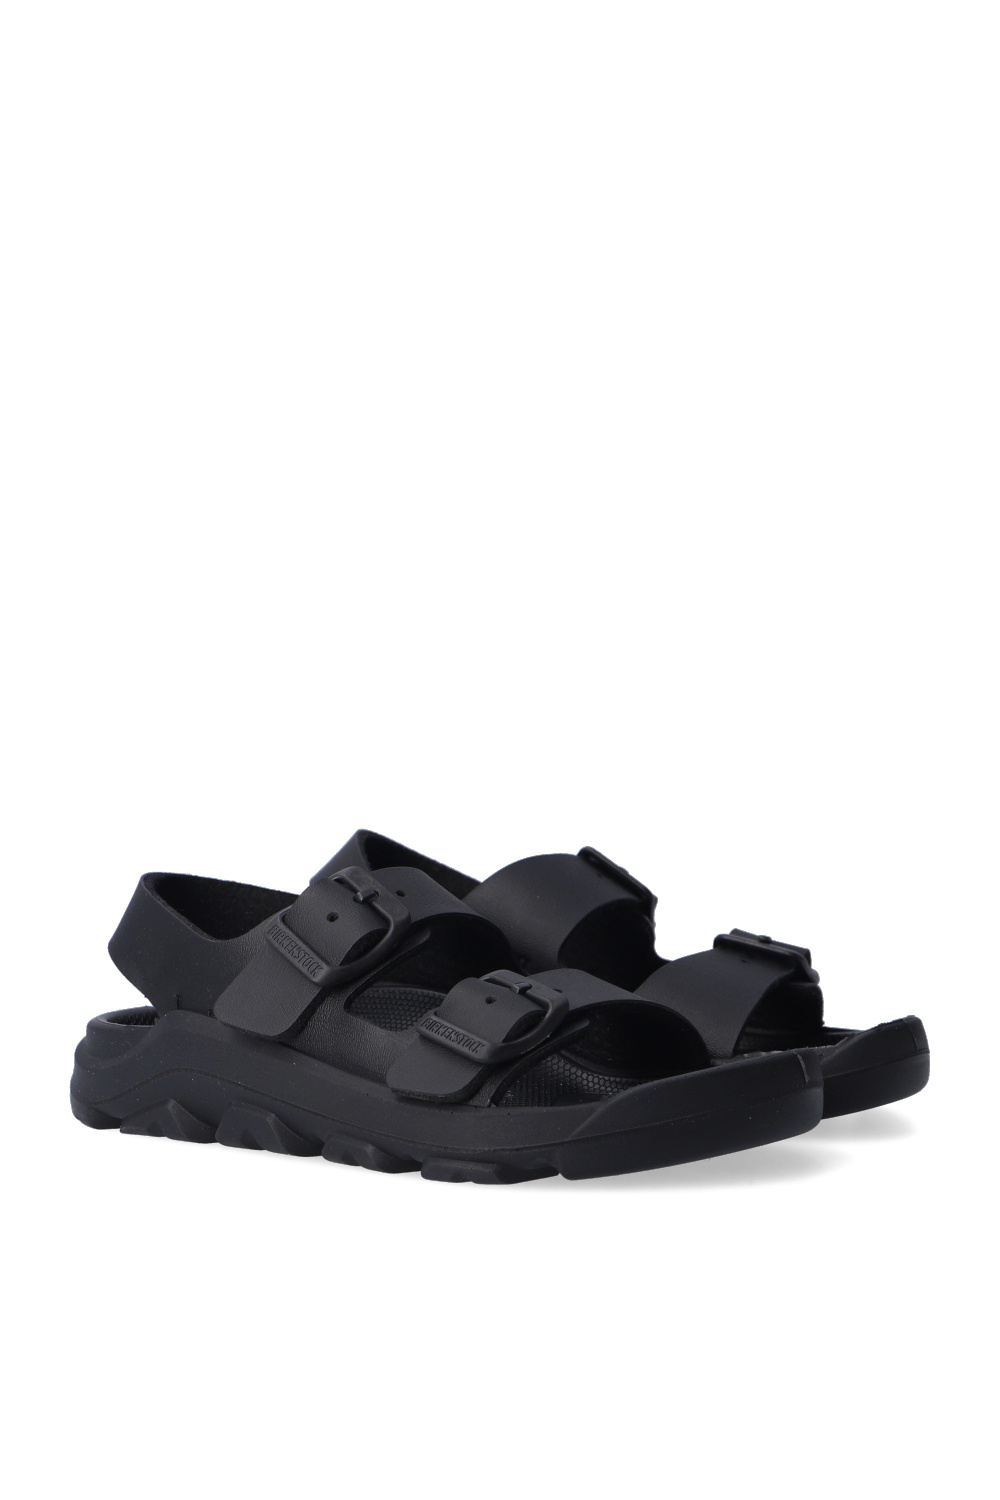 Black ‘Mogami’ sandals Birkenstock Kids - Vitkac Germany